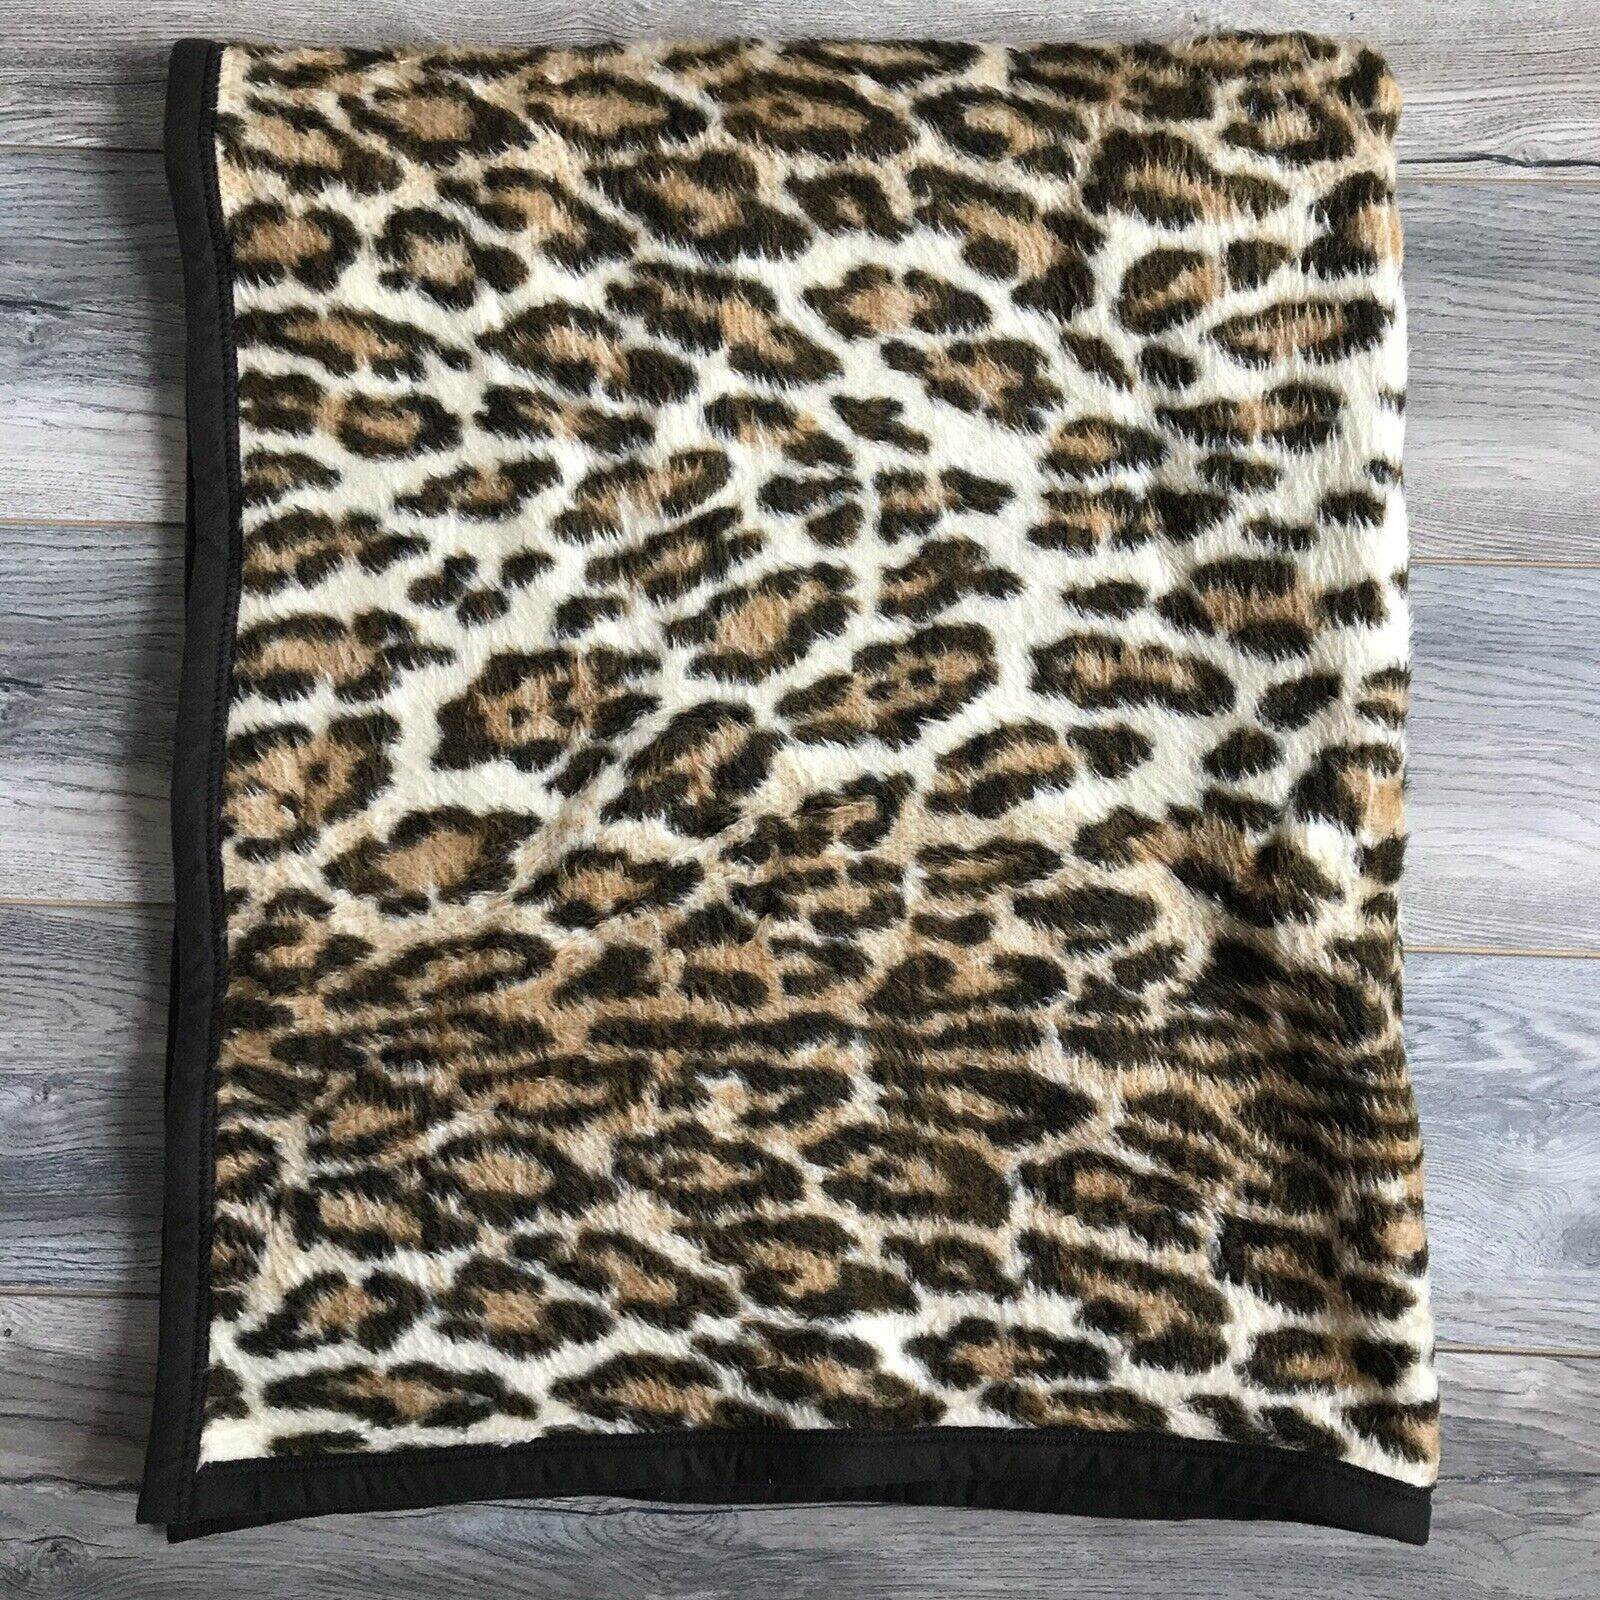 Biederlack Acrylic Throw Blanket Leopard Print Made in USA Plush Cheetah 50x60”